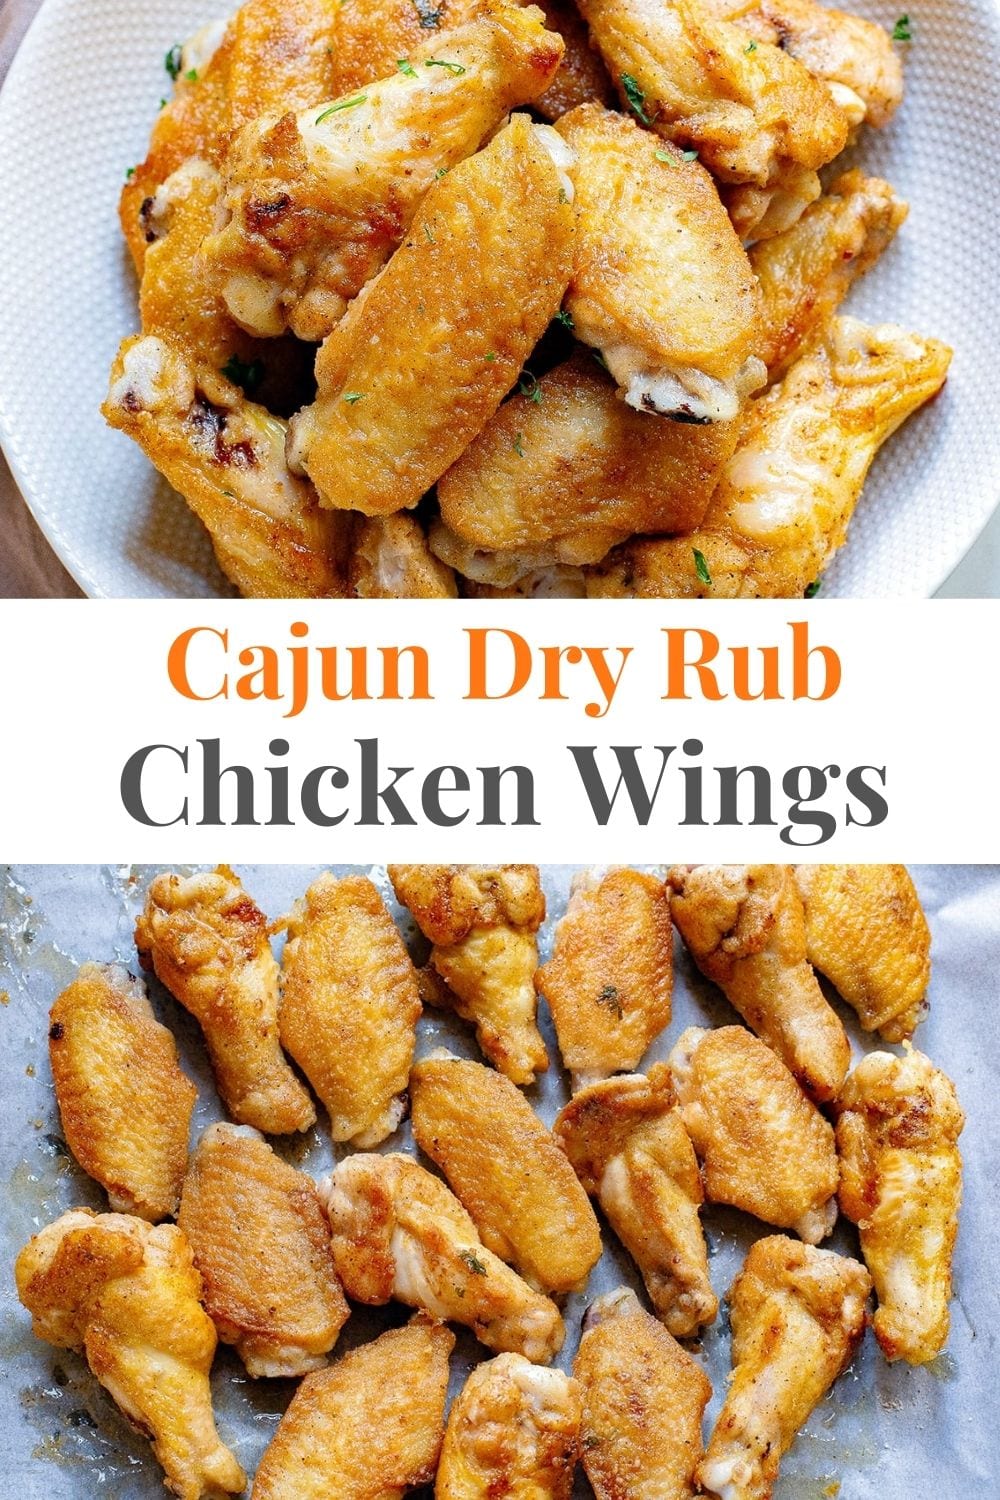 Cajun Dry Rub Chicken Wings